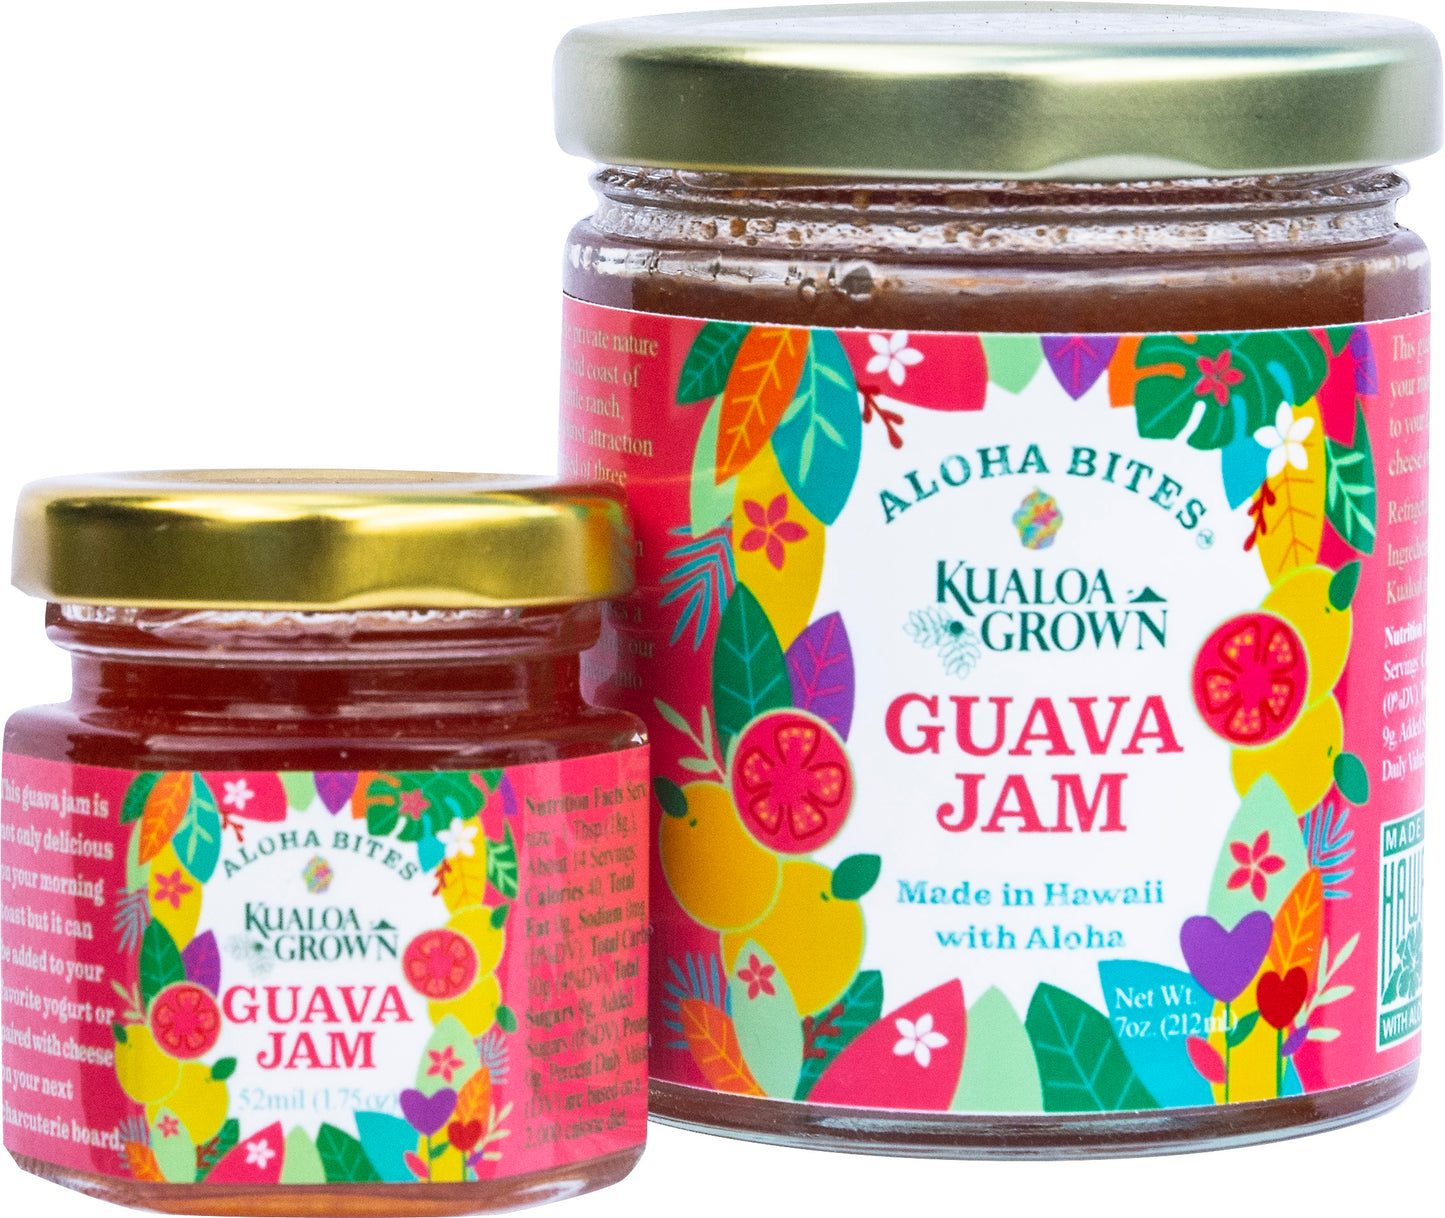 KualoaGrown Guava Jam